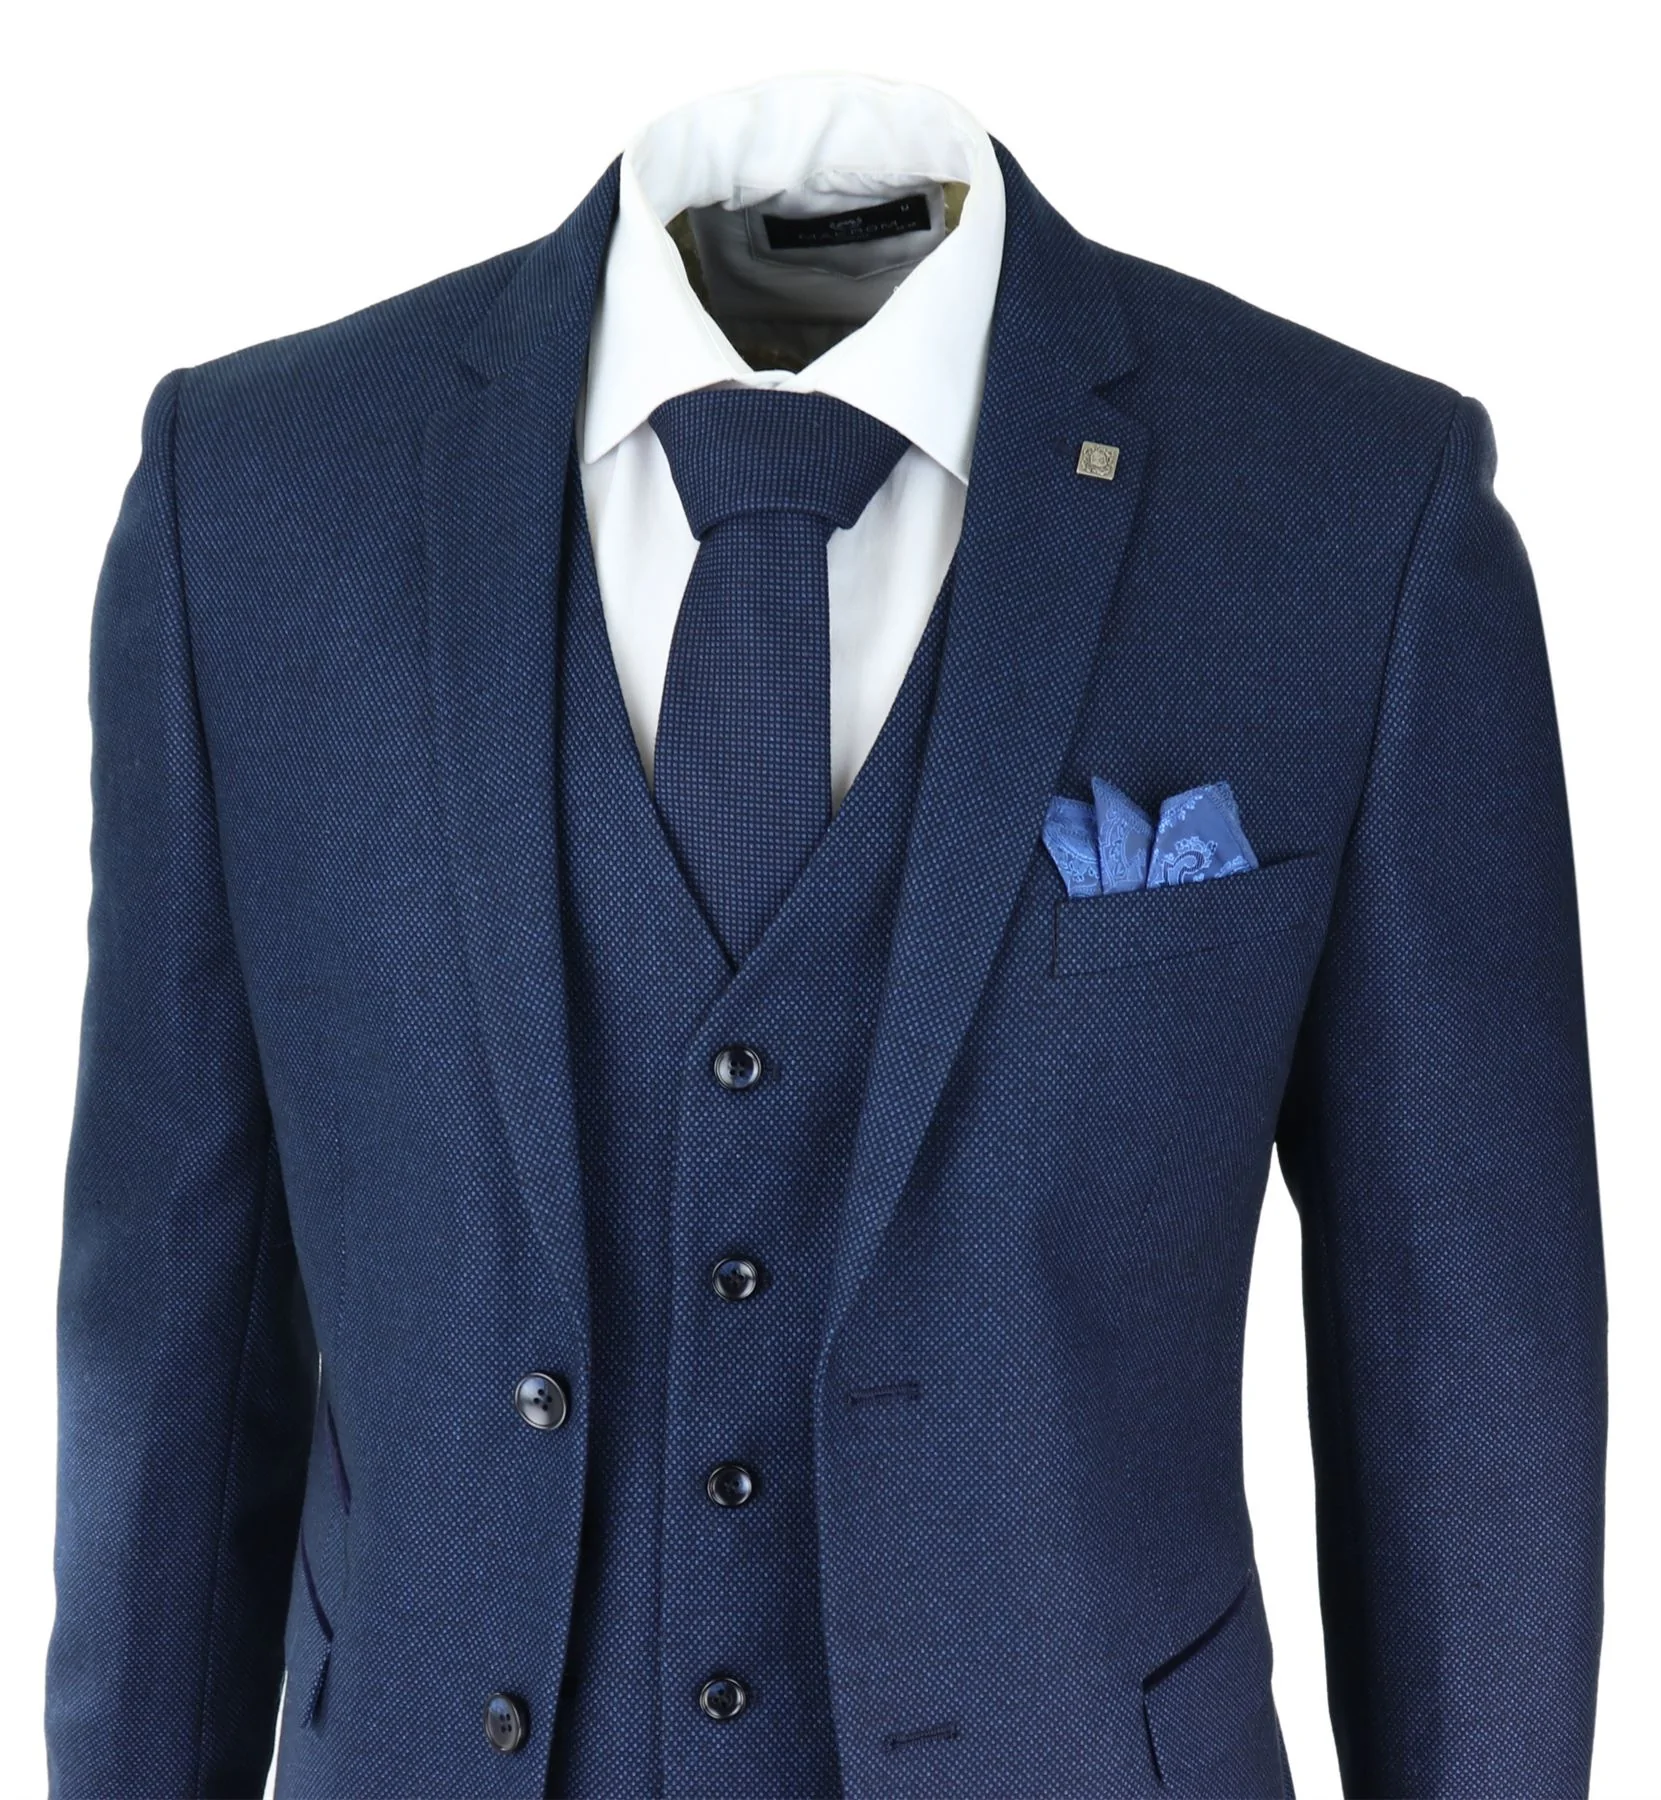 Blue Suits for Men | Men's Wedding Wear and Formal Wear – Uomo Attire